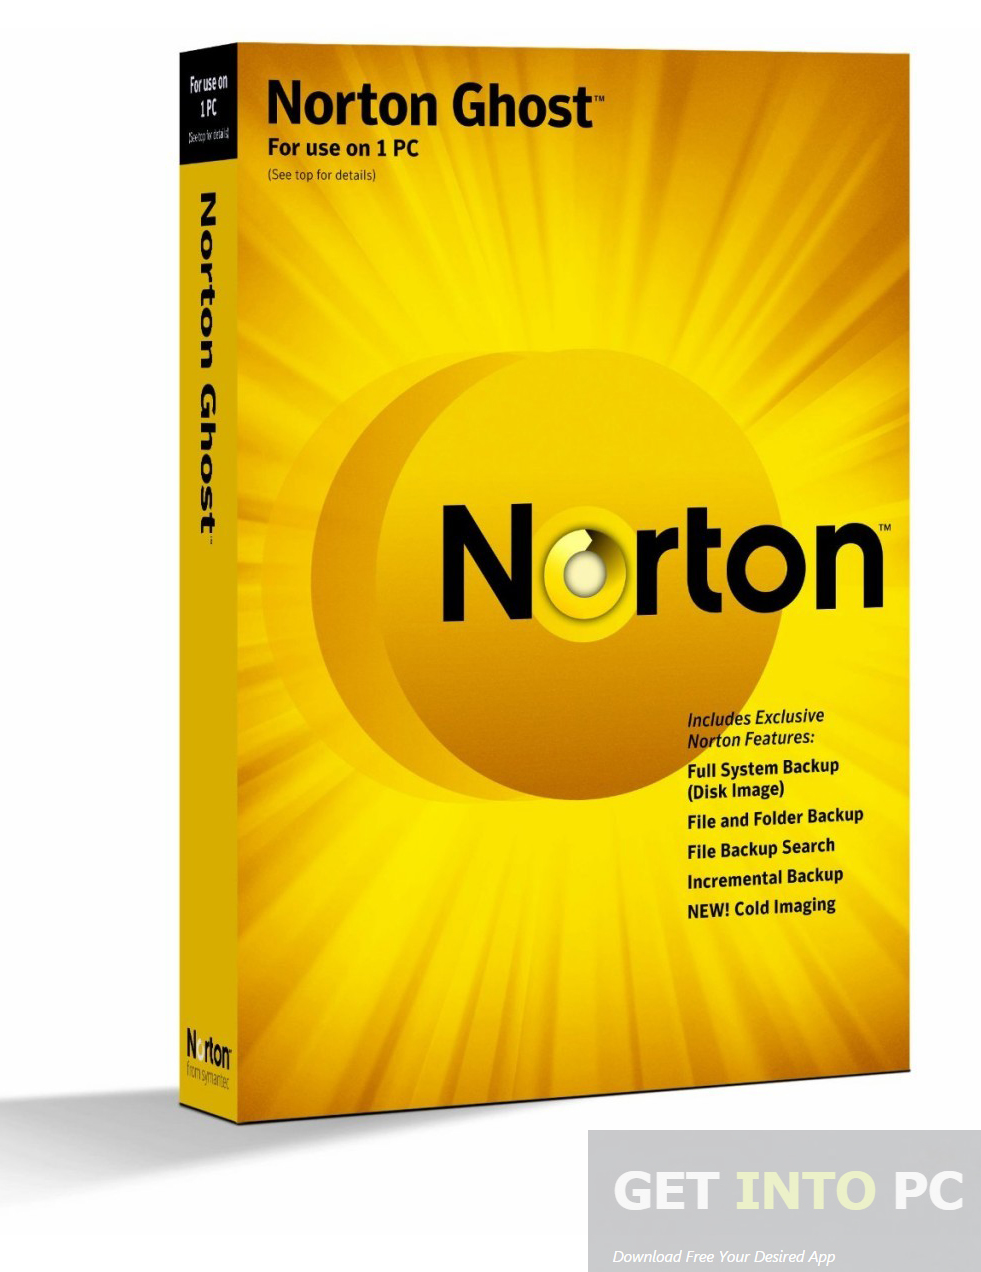 norton ghost windows 10 free download full version